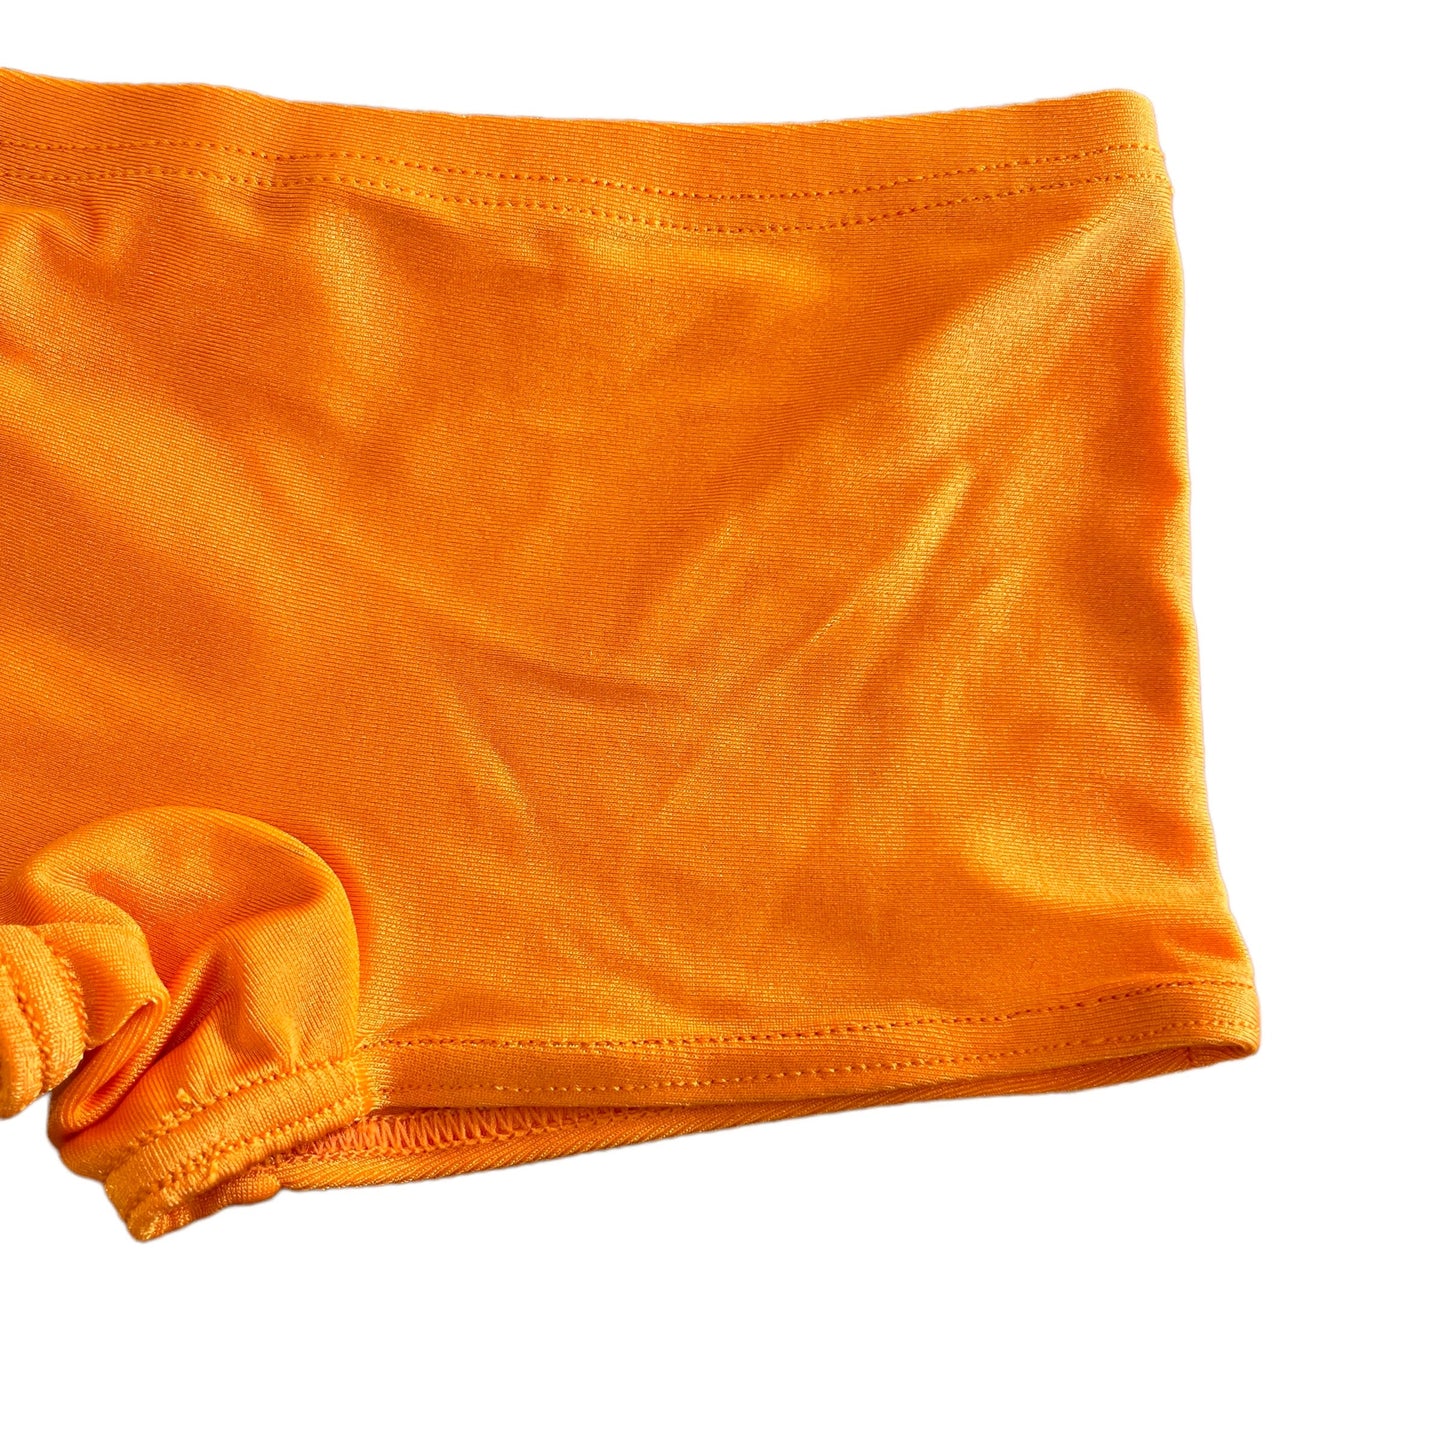 Vintage 70's Orange Swimming Trunks / Shorts 5-6Y